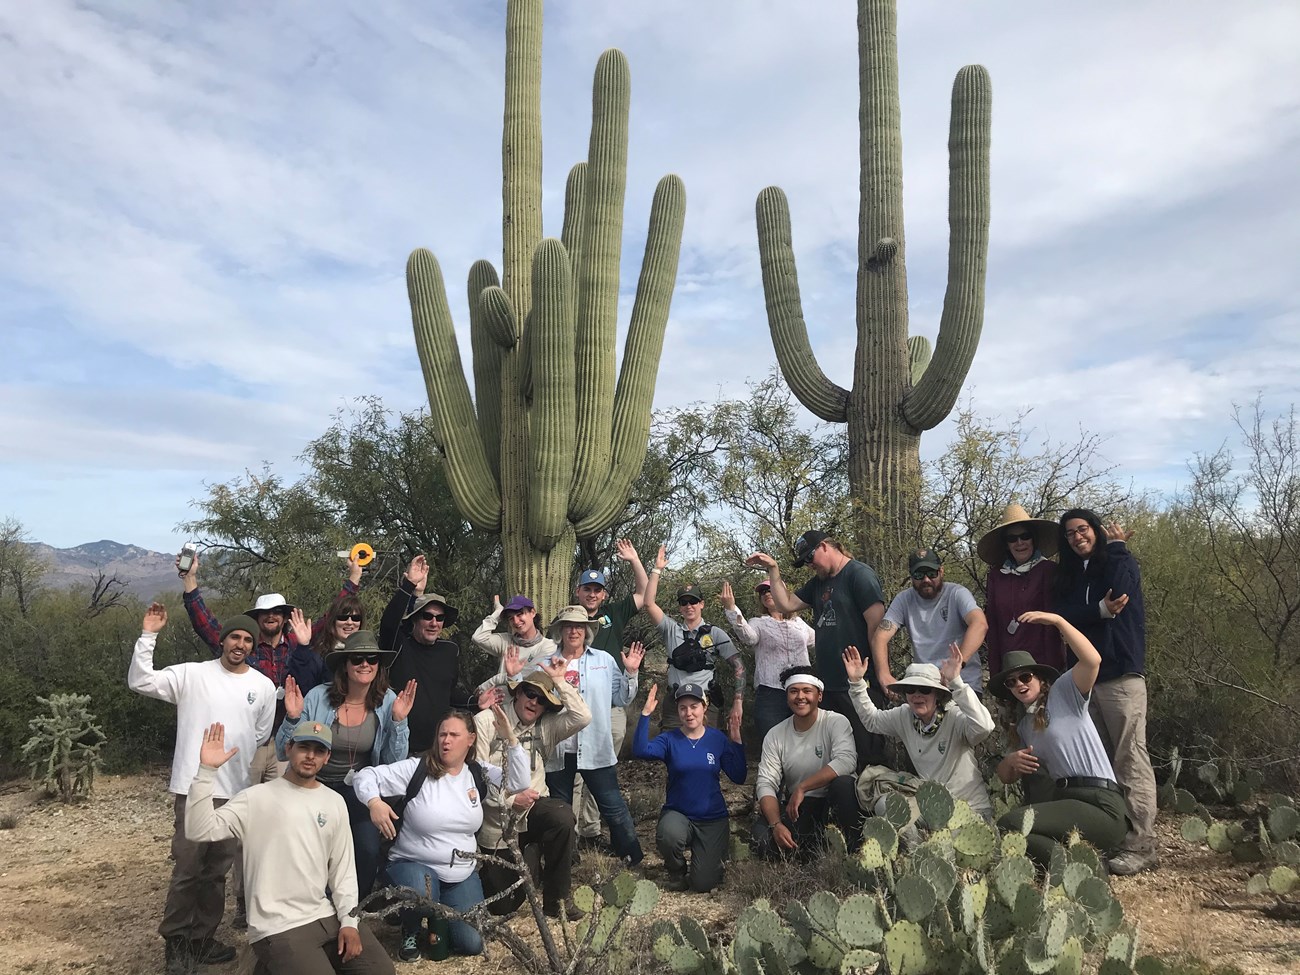 NPS staffs and volunteers posing like a saguaro